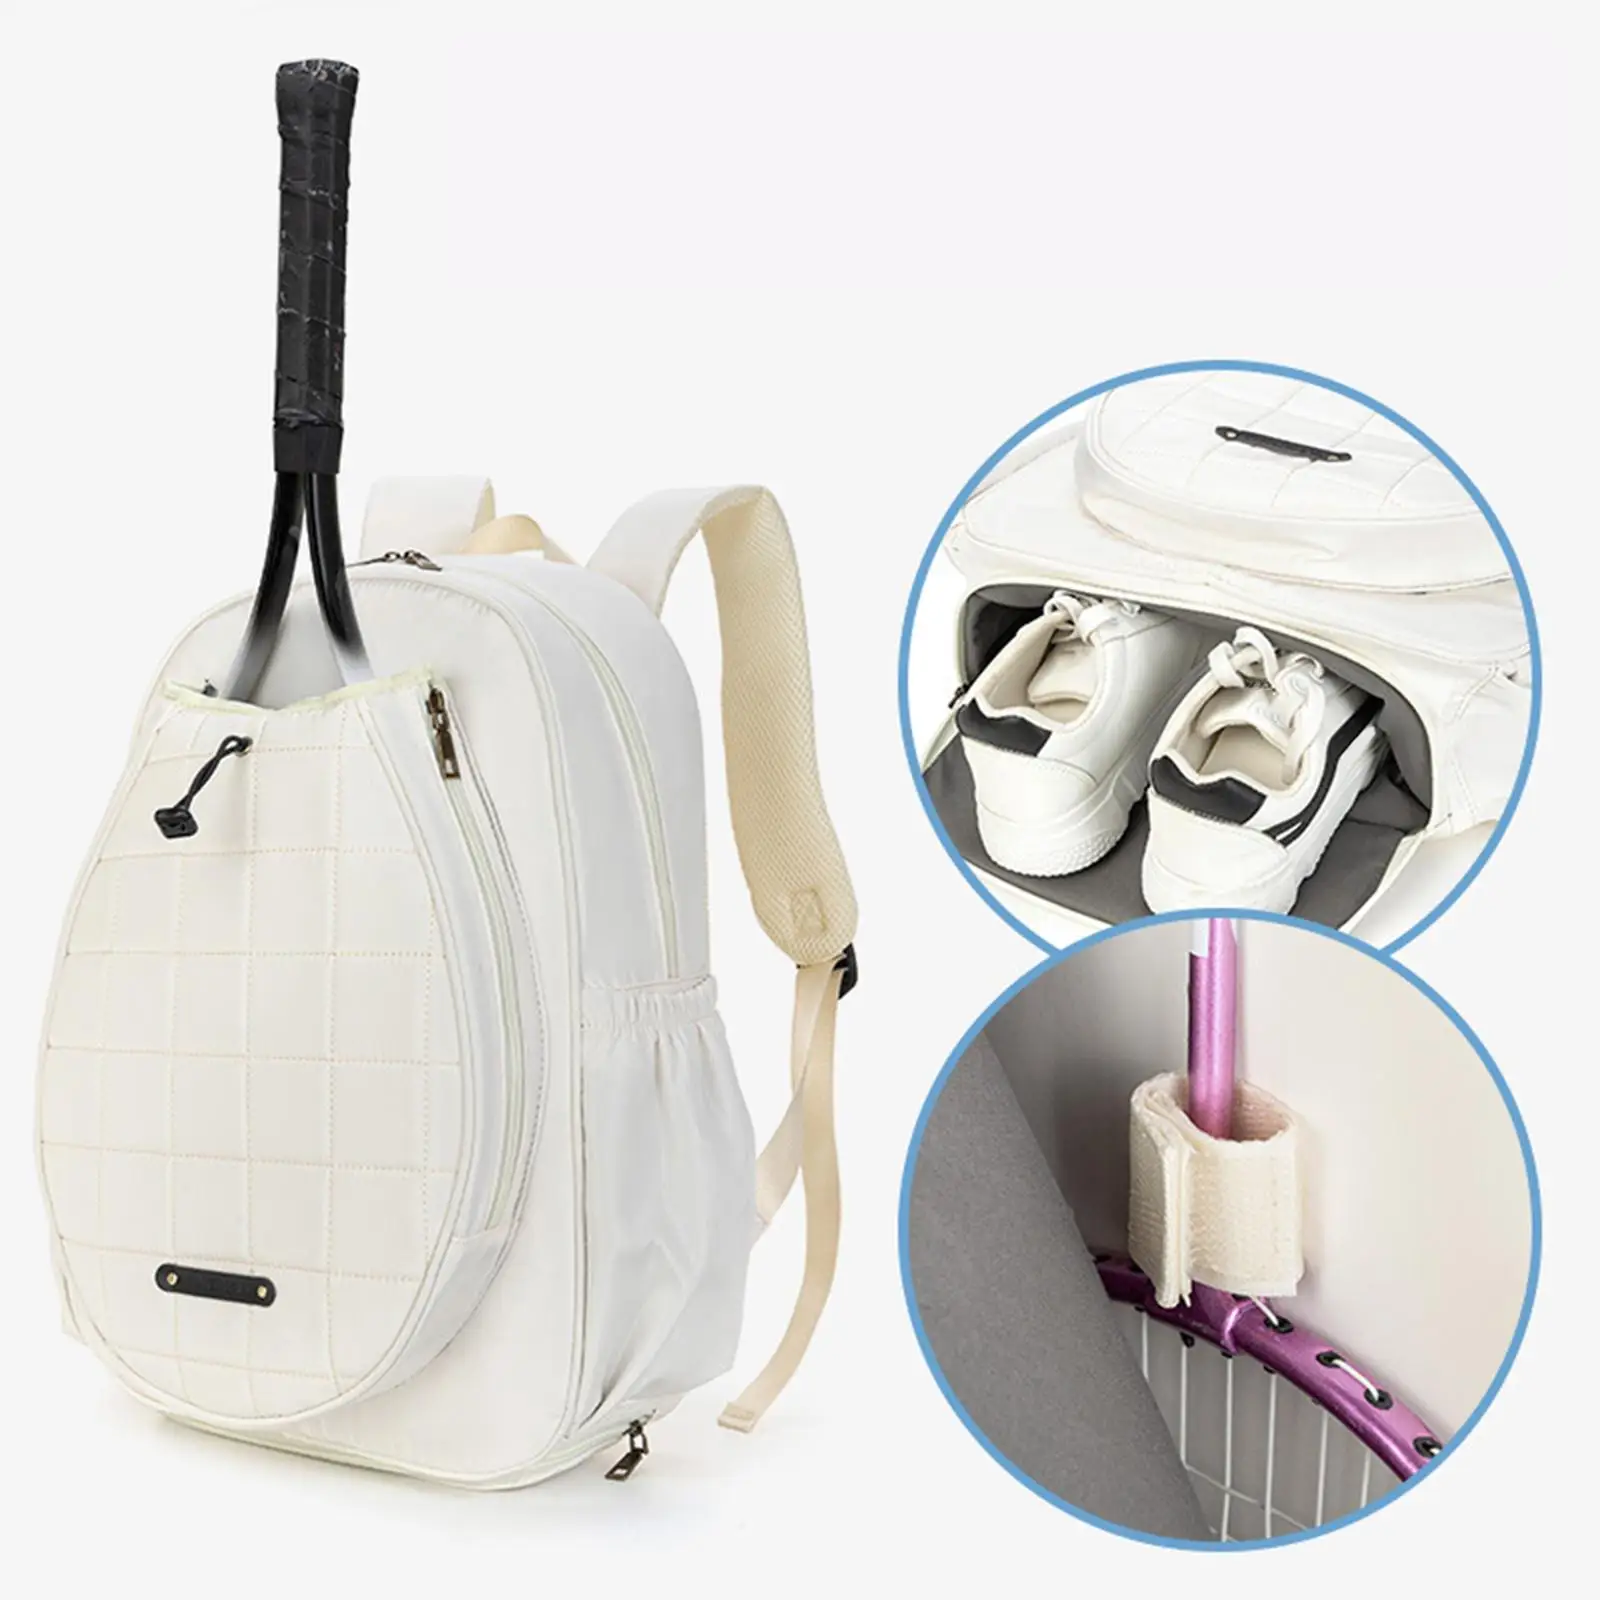 Tennis Backpack Tennis Bag Outdoor Sport Bag Racquet Cover Large Racket Bag for Balls Accessories Tennis Racket Squash Racquet